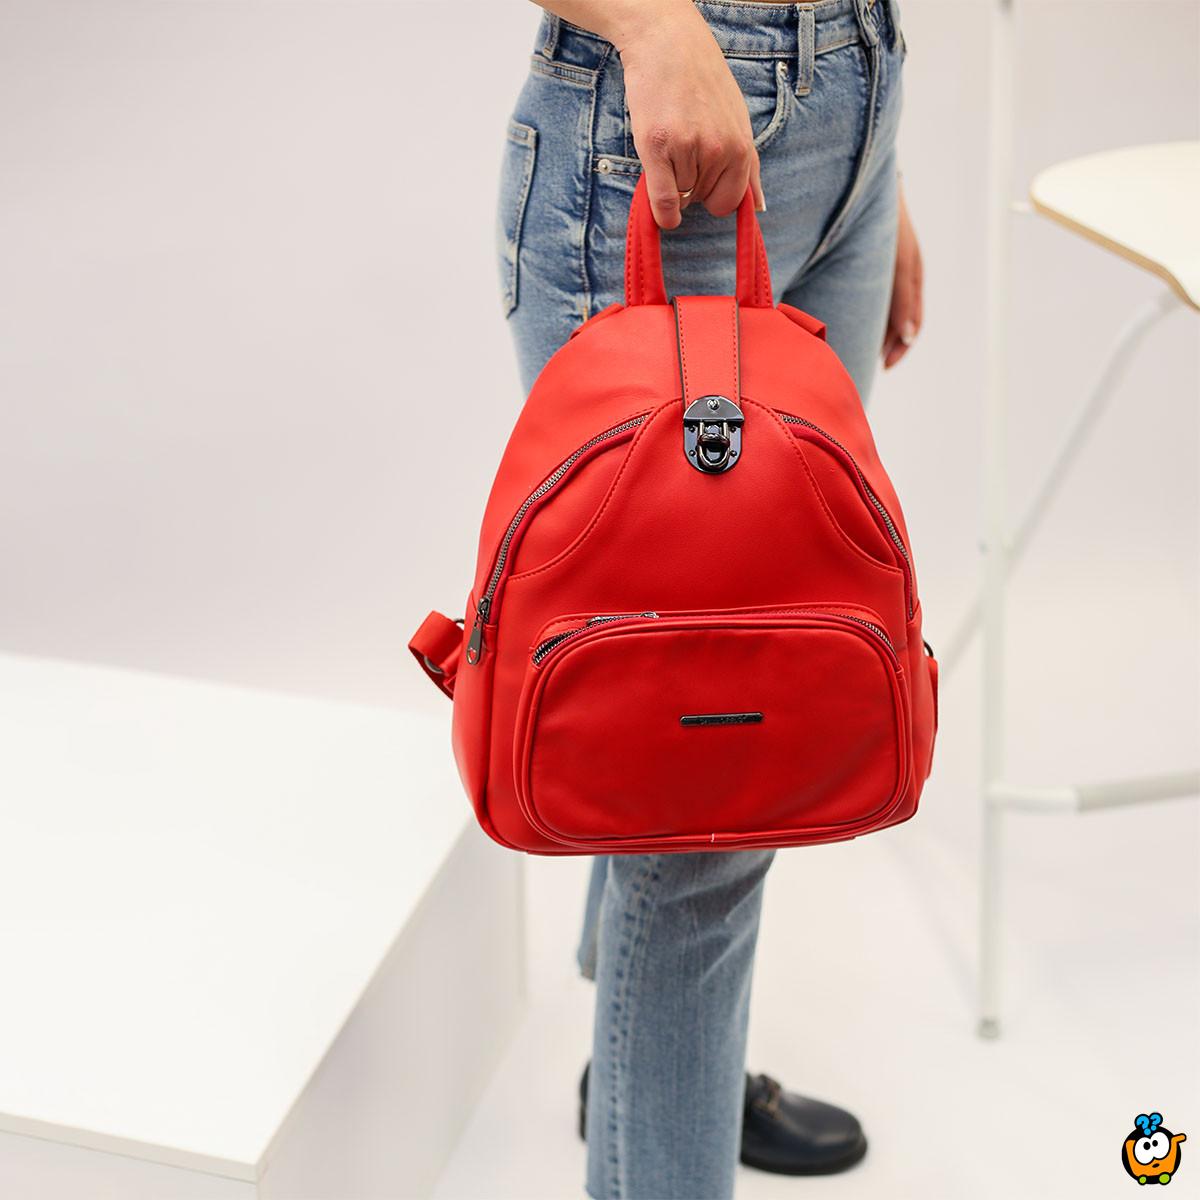 Backpack Red - kompaktni modni ranac u crvenoj  boji 1381 RED